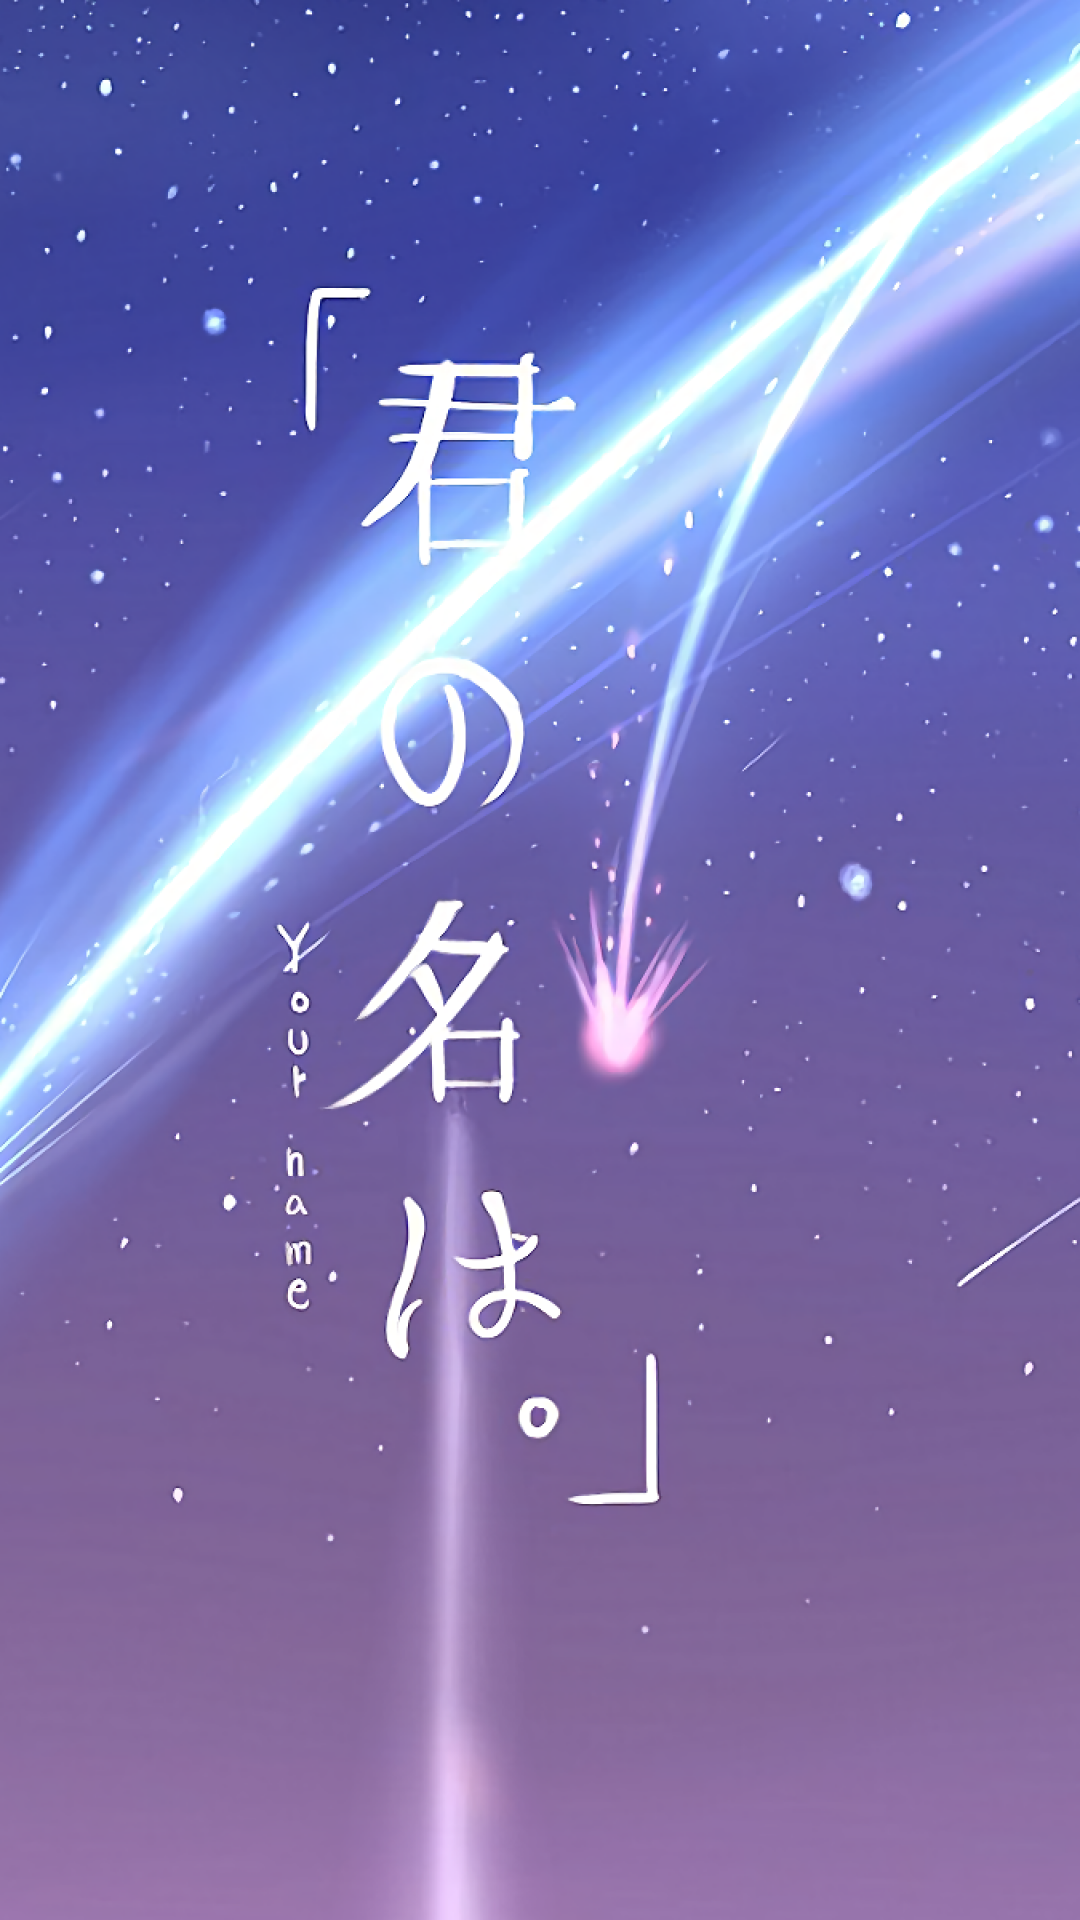 kimi no na wa wallpaper,sky,text,atmosphere,violet,font